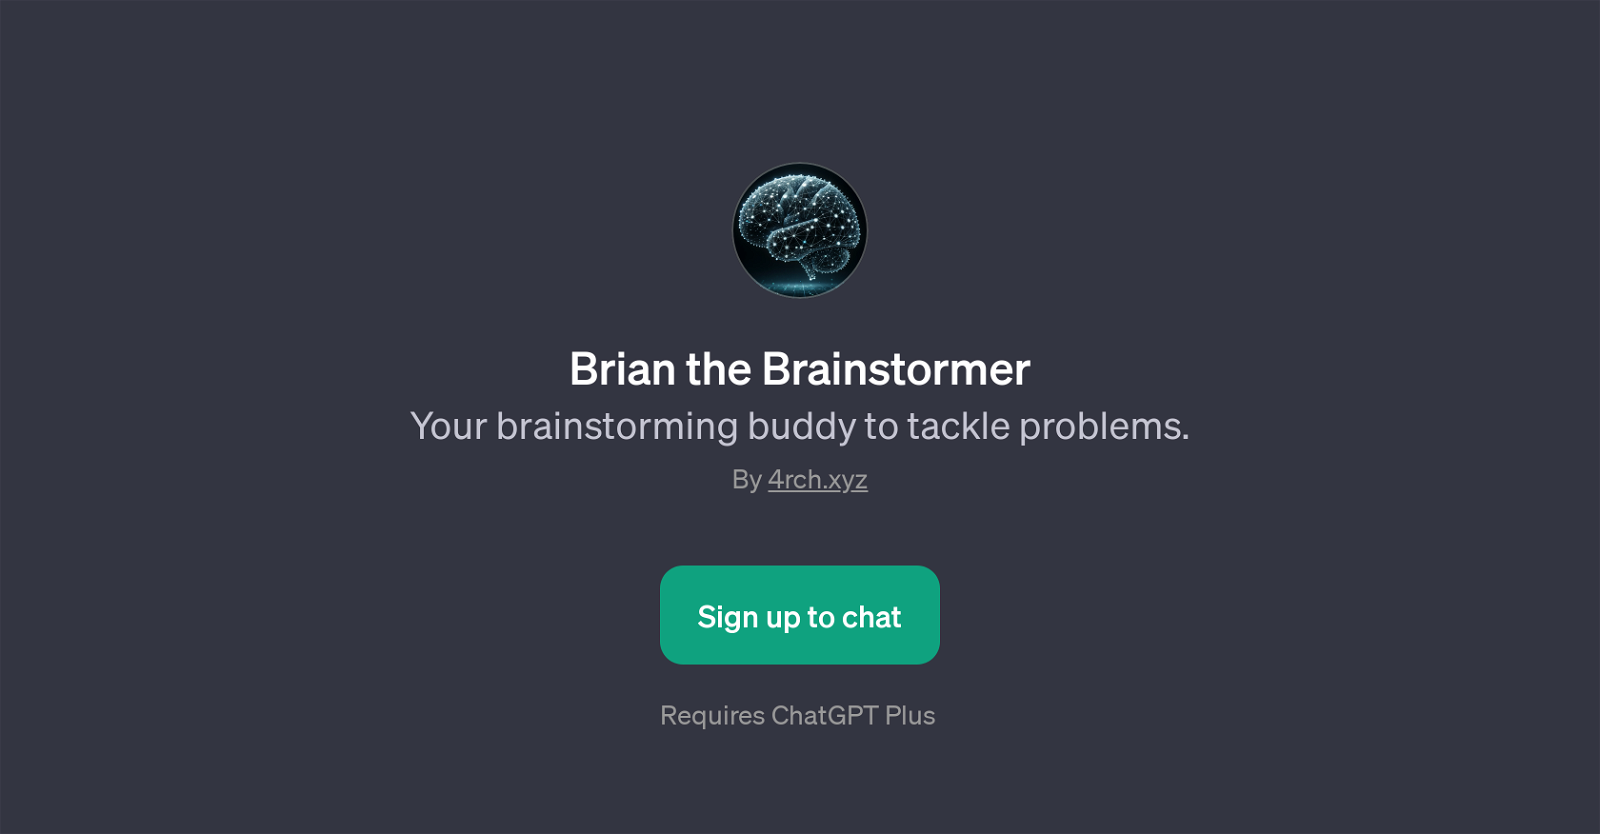 Brian the Brainstormer website